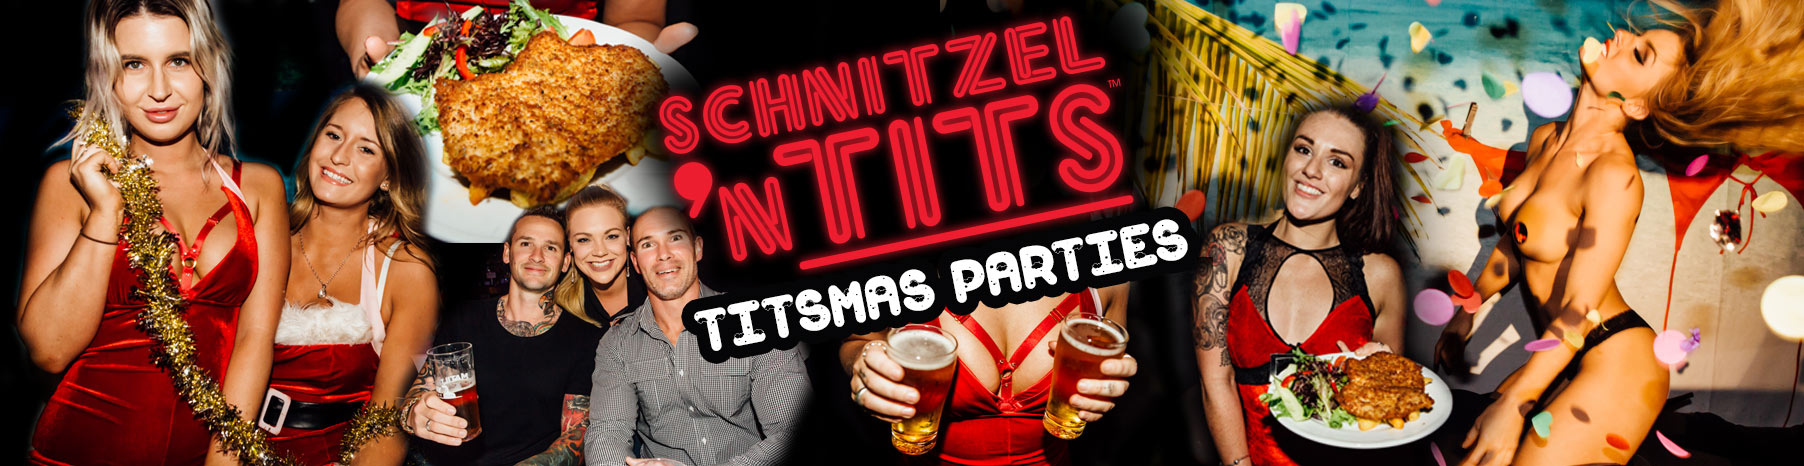 work christmas party ideas schnitzel n tits